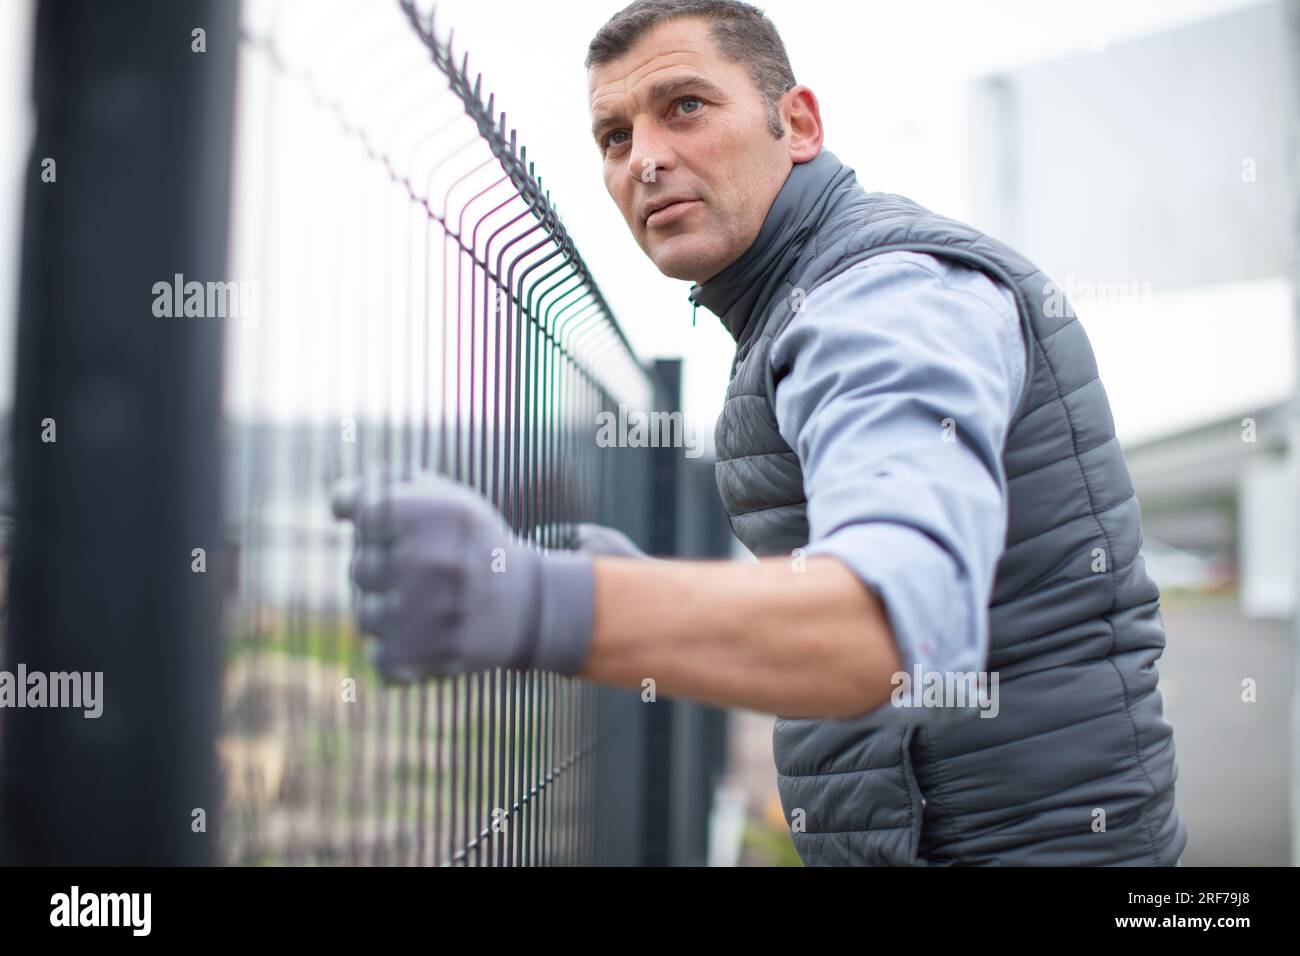 worker installing welded metal mesh fence Stock Photo